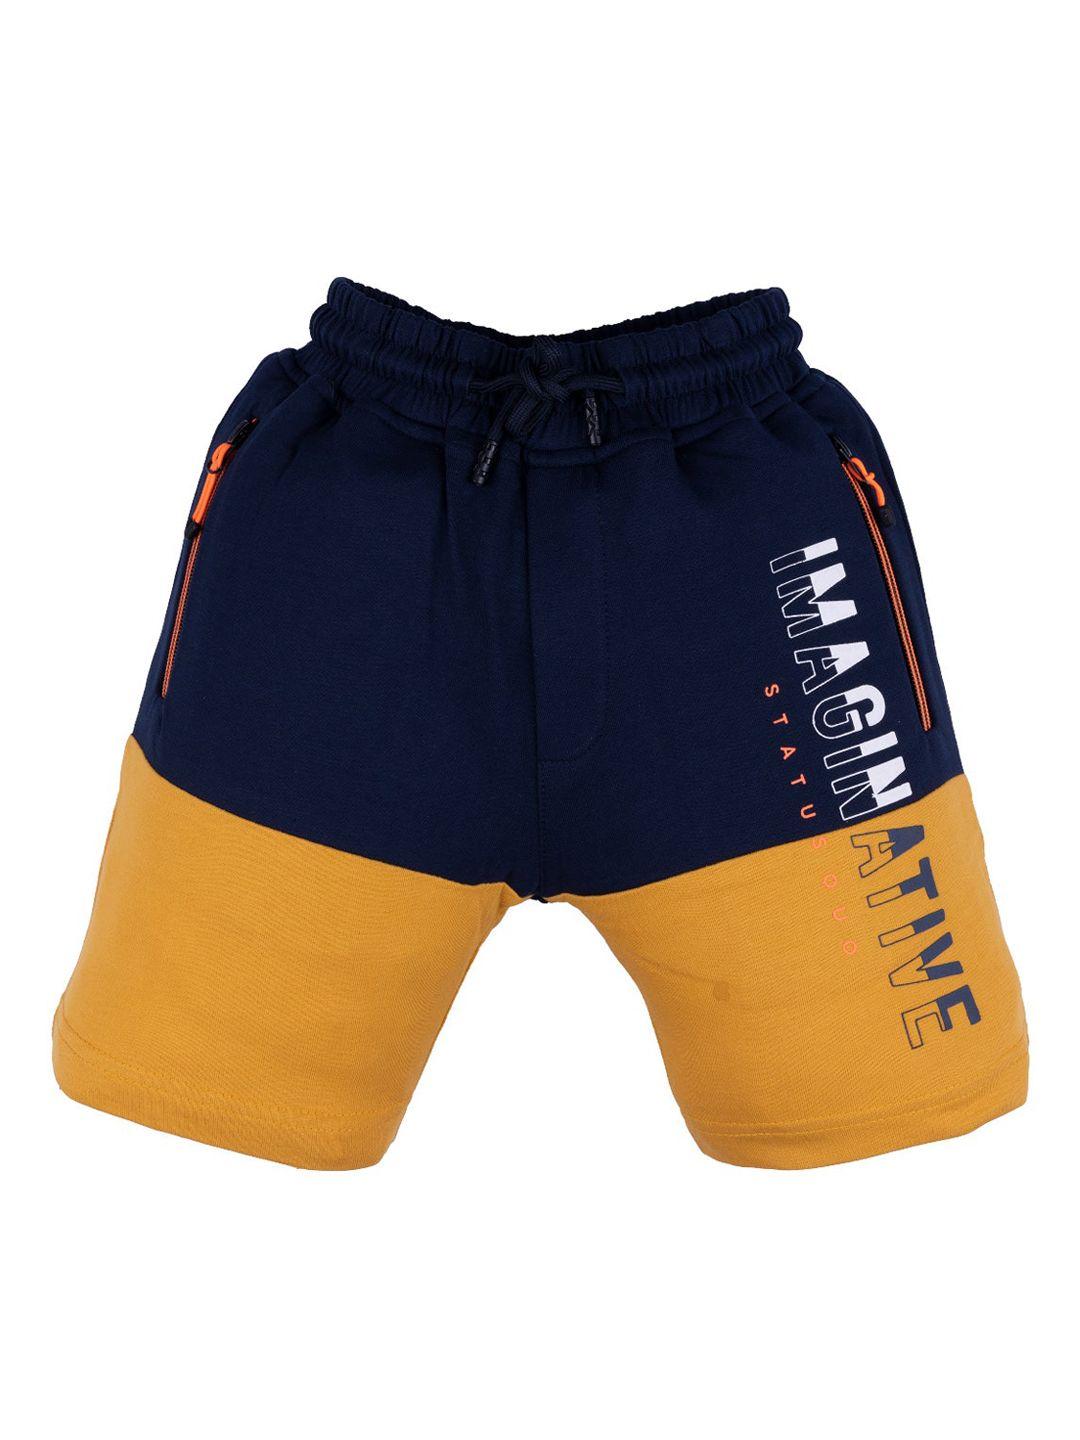 status quo boys navy blue printed high-rise shorts